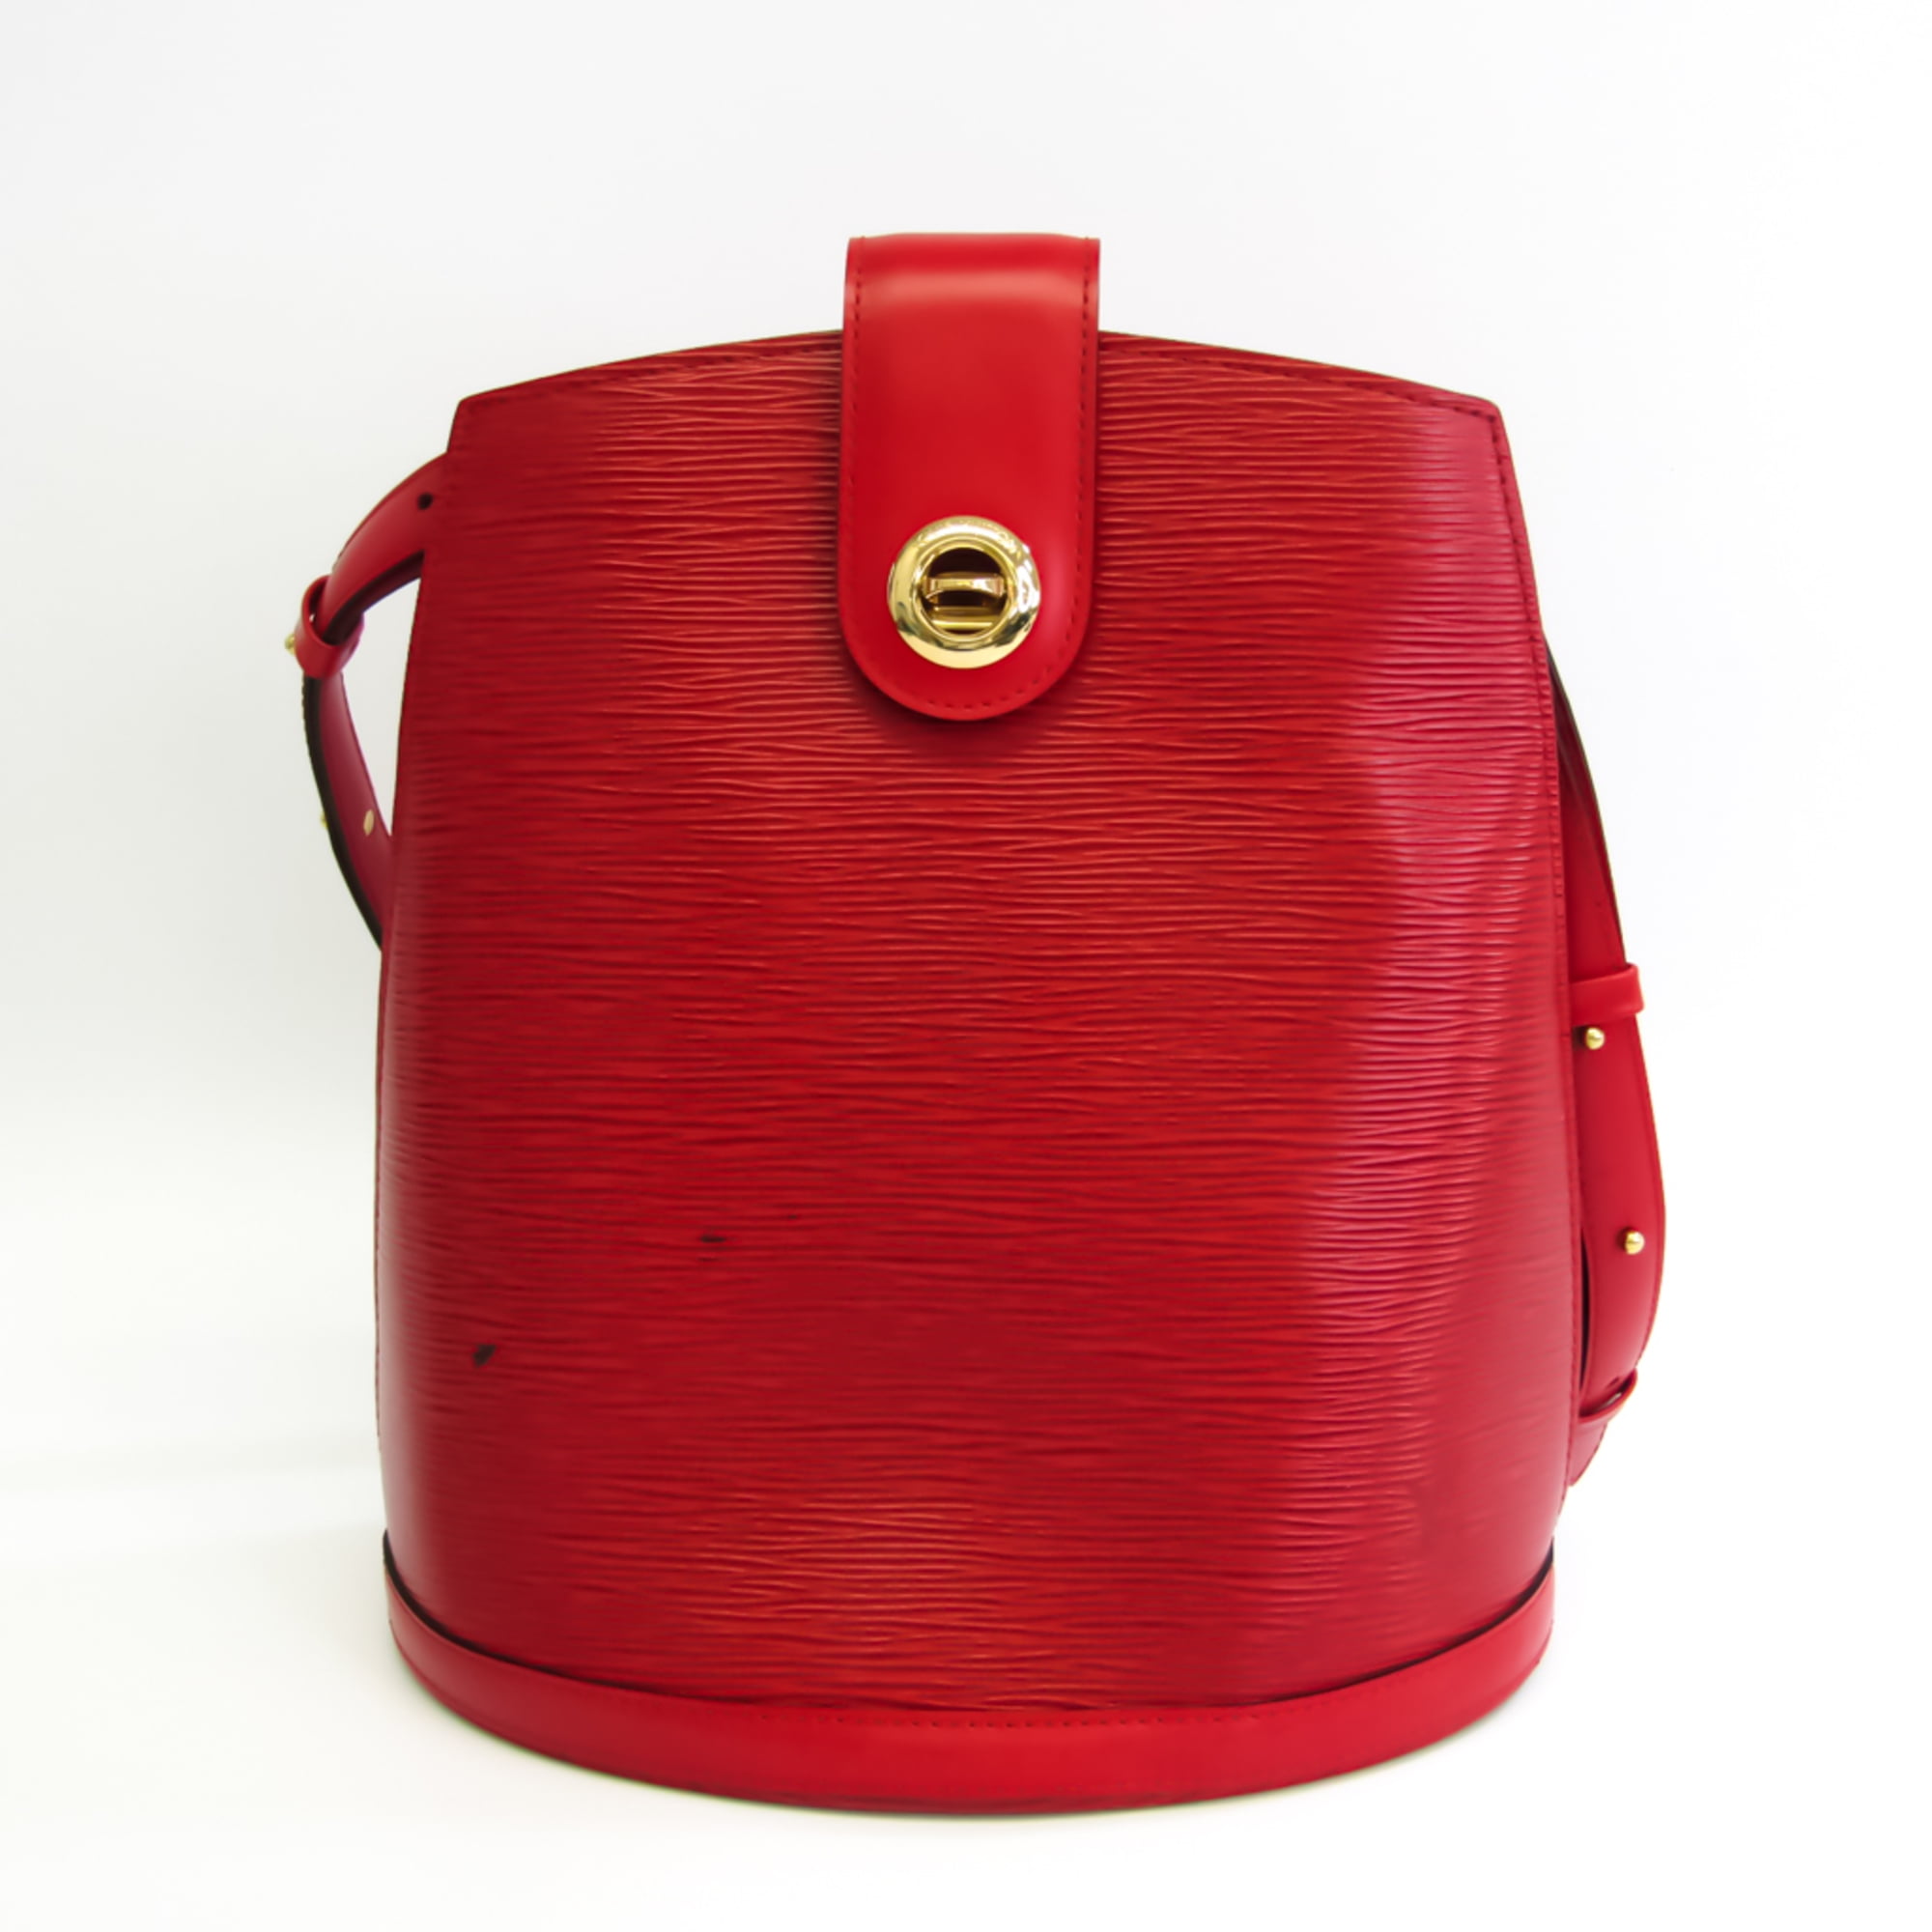 Louis Vuitton Epi Cluny Mini w/ Strap - Black Mini Bags, Handbags